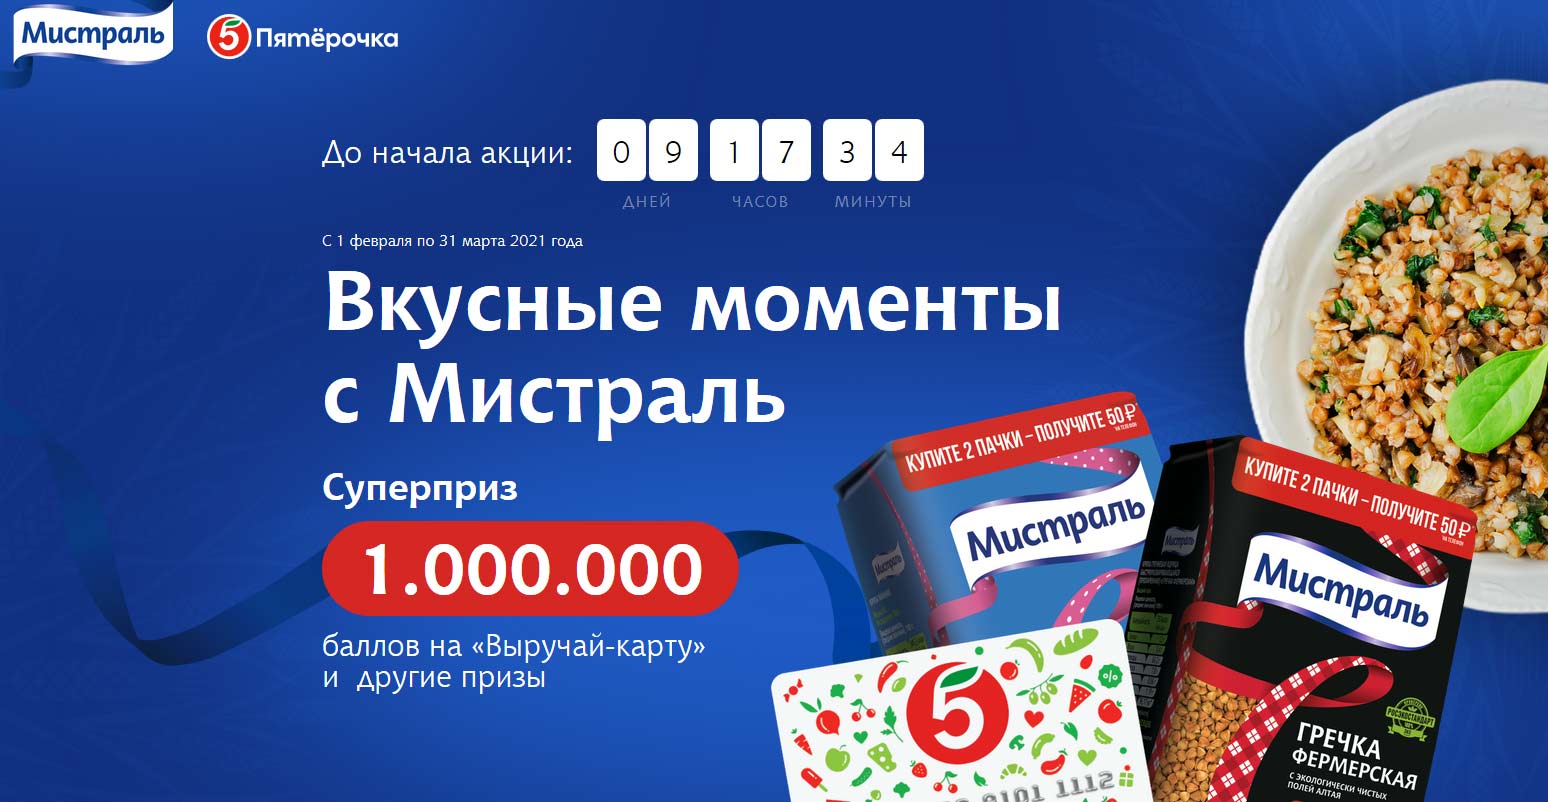 www.5ka-mistral.ru как зарегистрироваться 